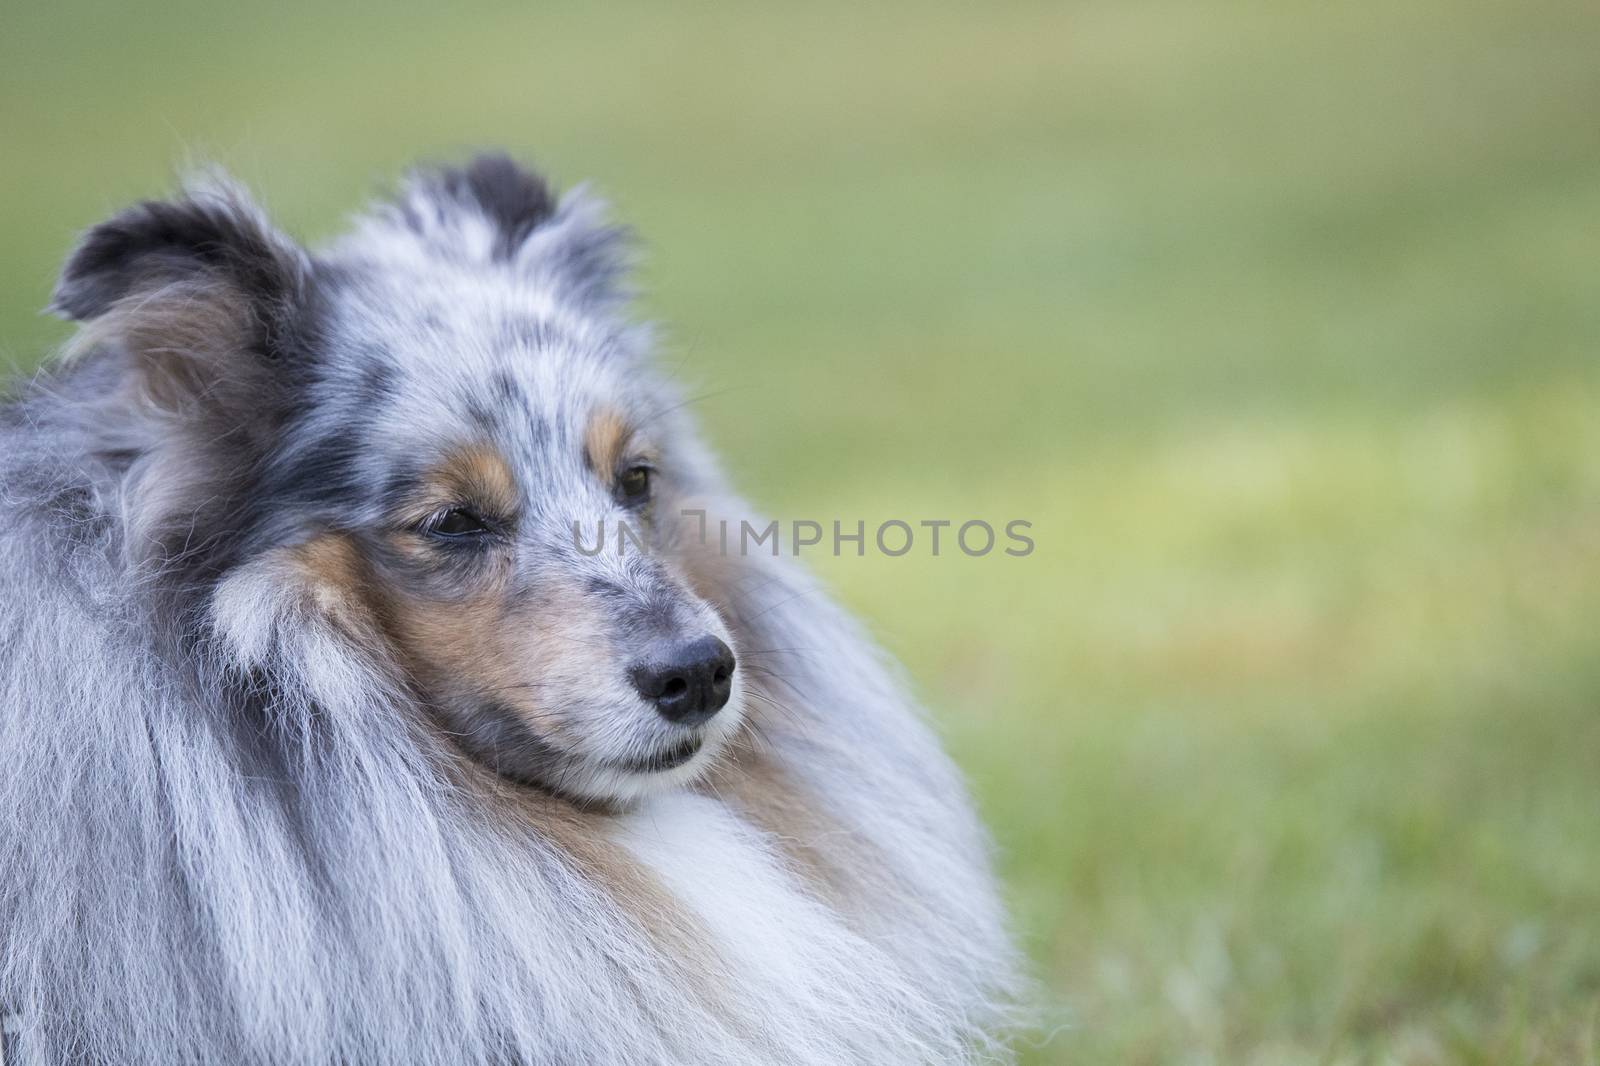 Dog, Shetland Sheepdog, headshot by avanheertum